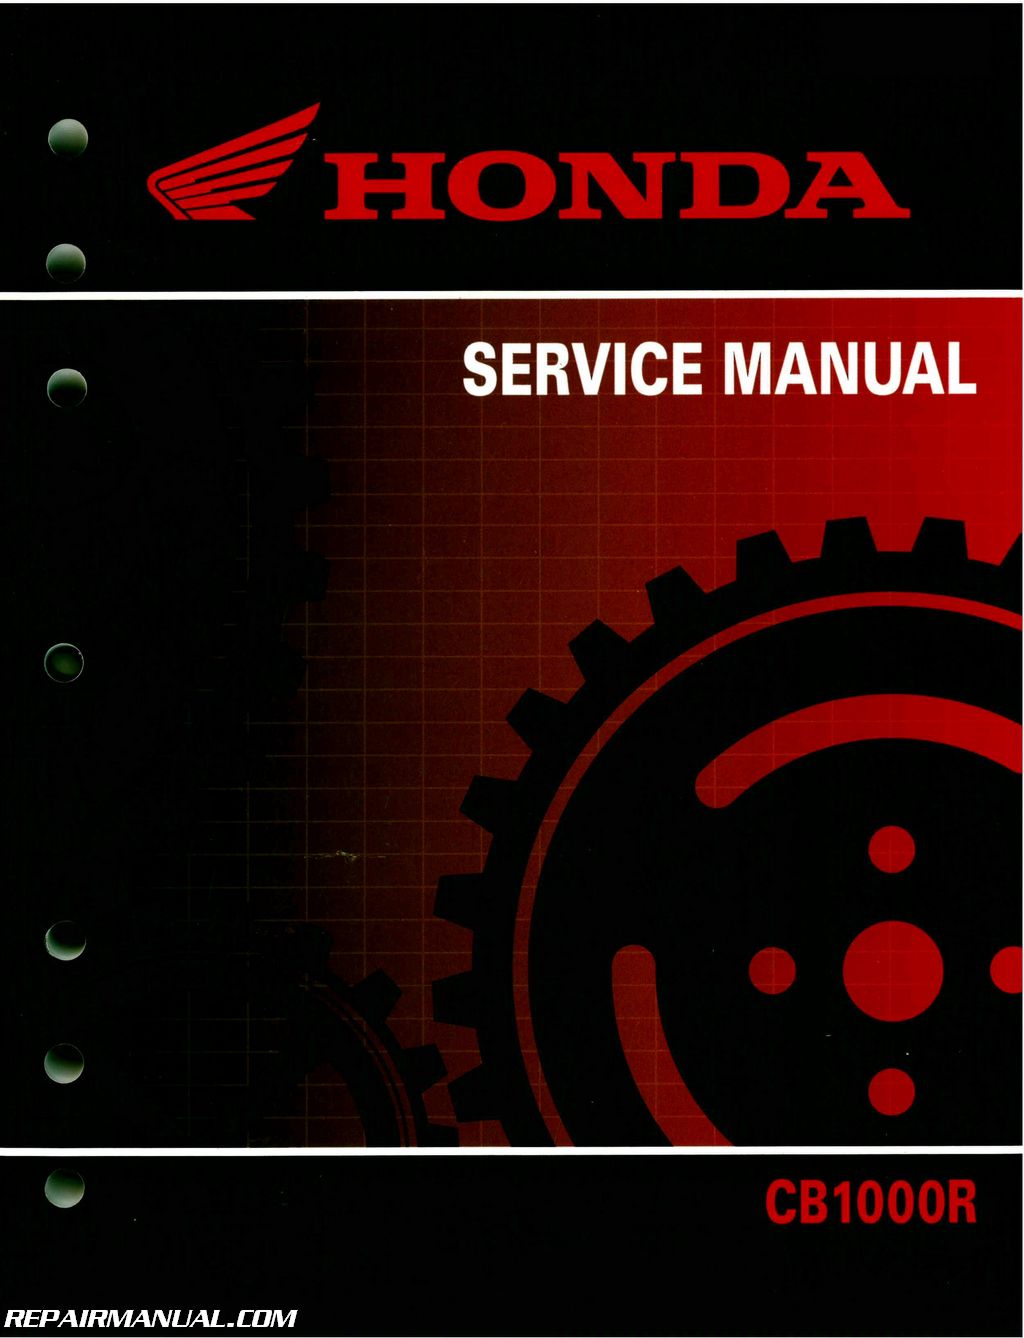 Honda Xr2500 Owners Manual